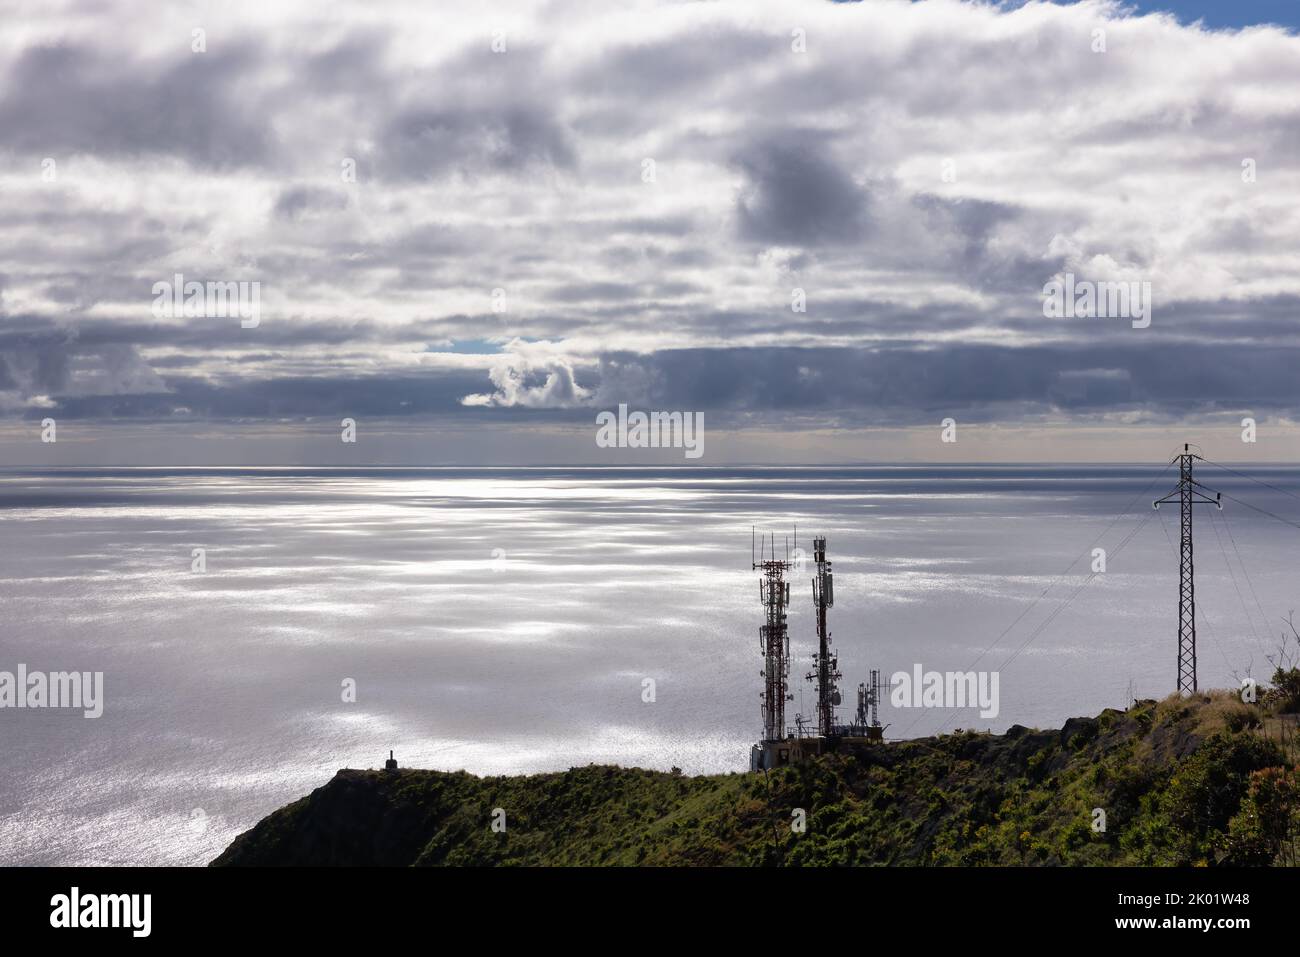 Coast La Palma, Canary Islands, seascape with silhouette of telephone transmission towers Stock Photo